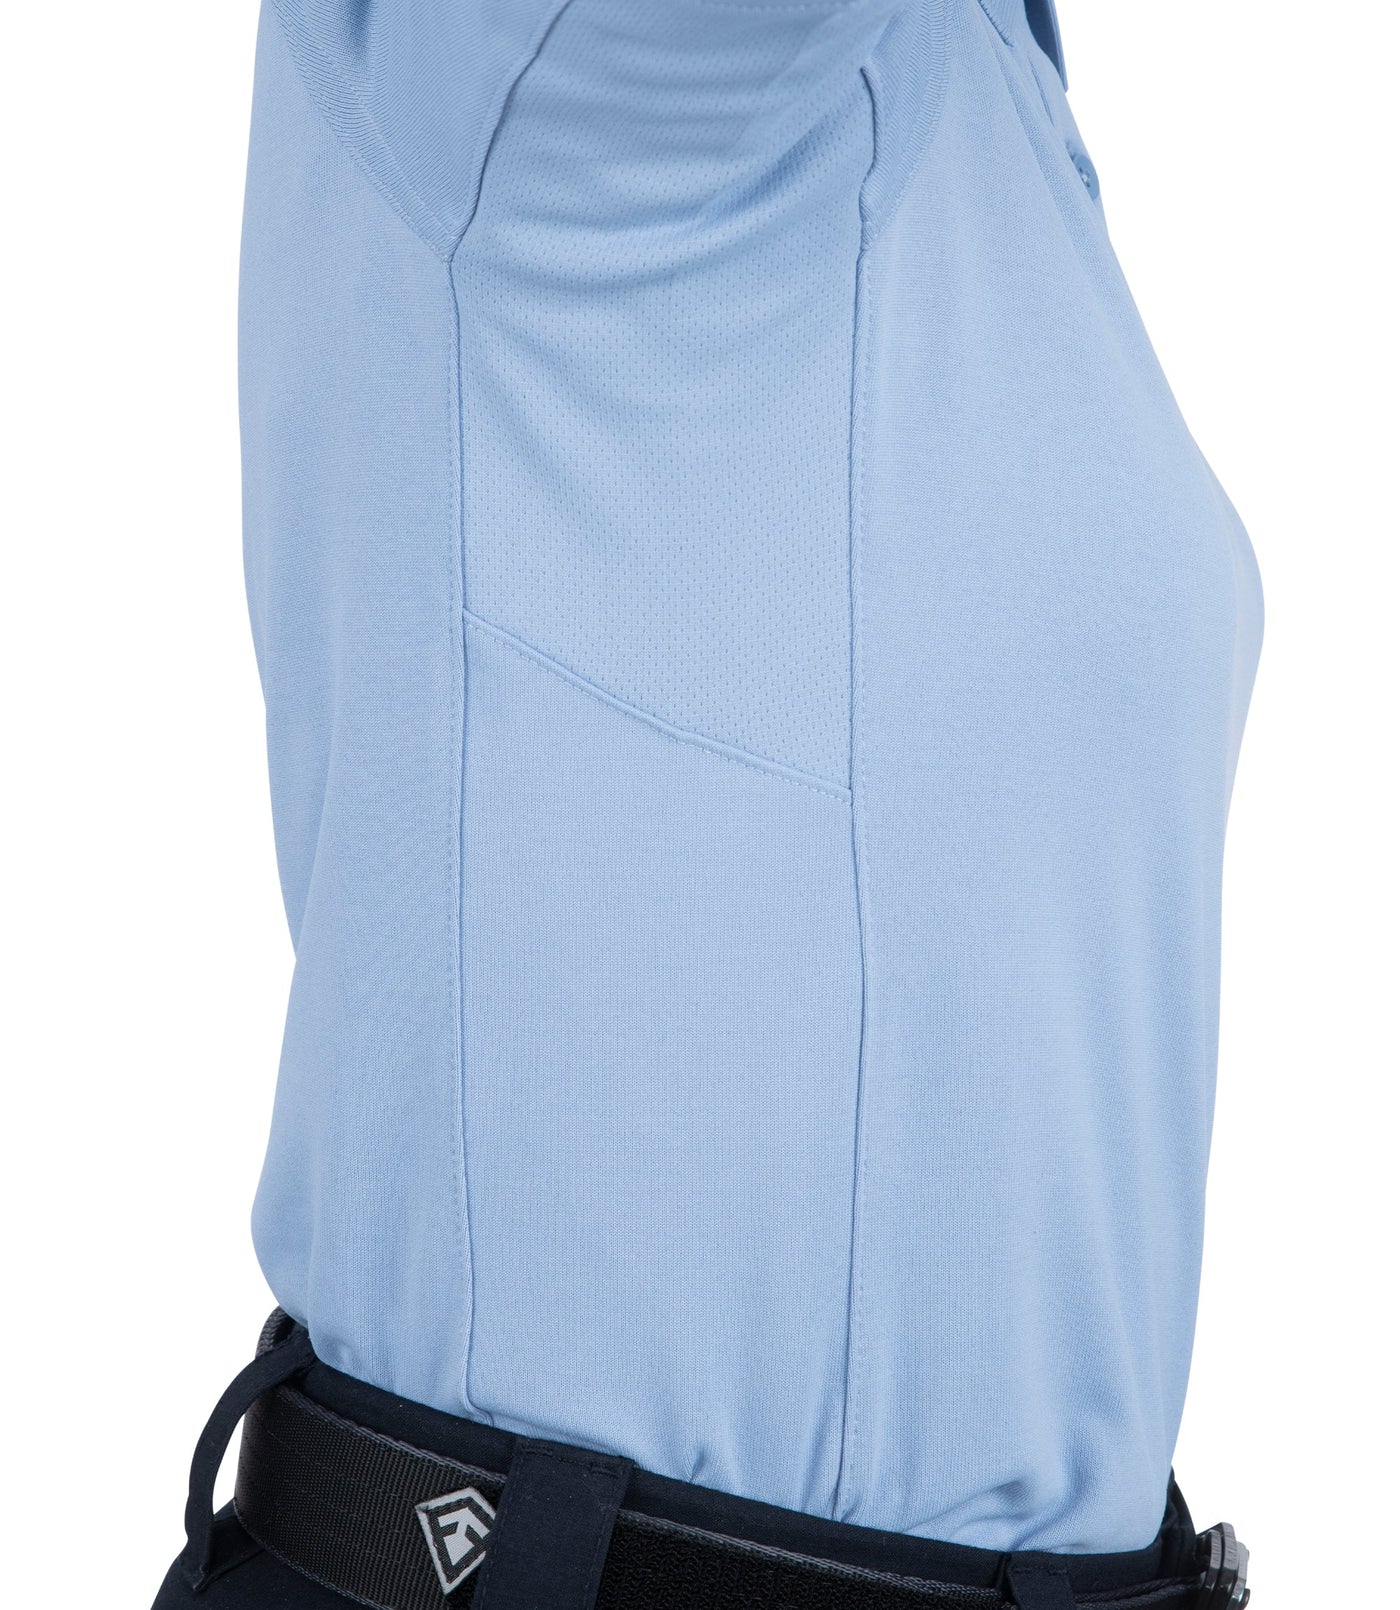 Women's Performance Short Sleeve Polo - Medium Blue